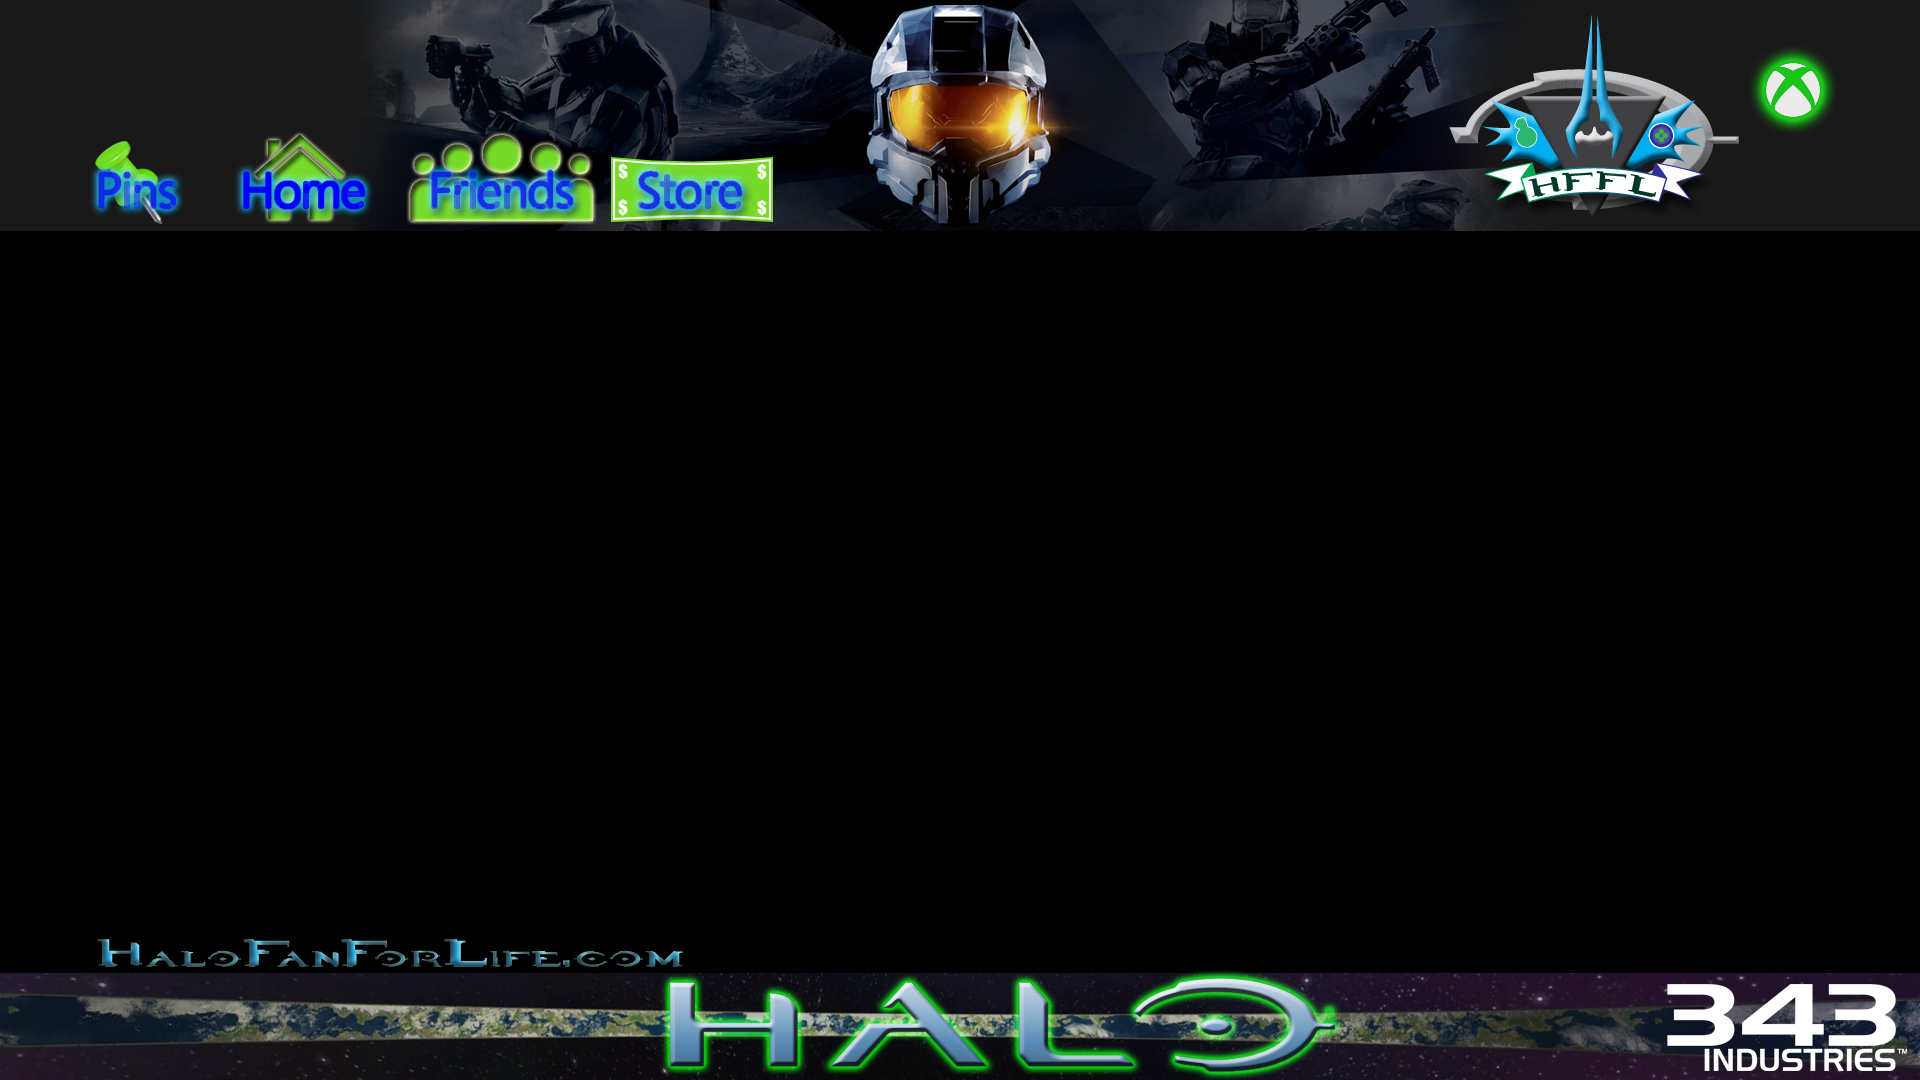 XBOX One to allow custom back grounds! (HFFL custom background!!!) |  HaloFanForLife